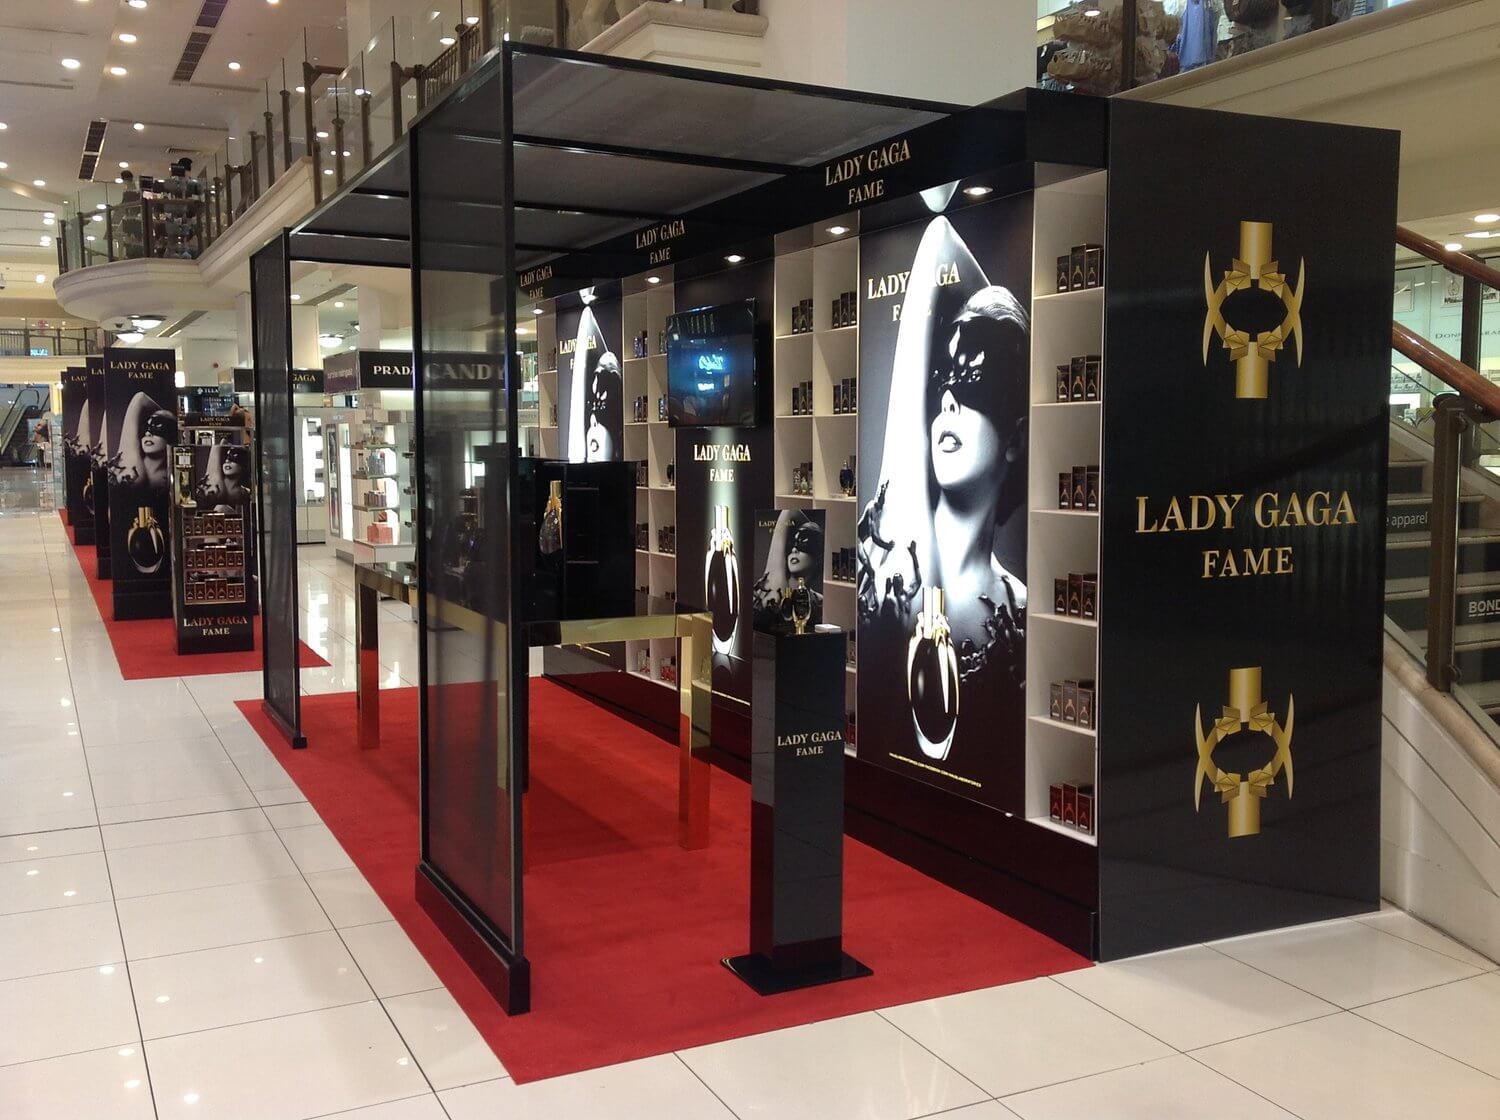 Lady Gaga purfume stand display.